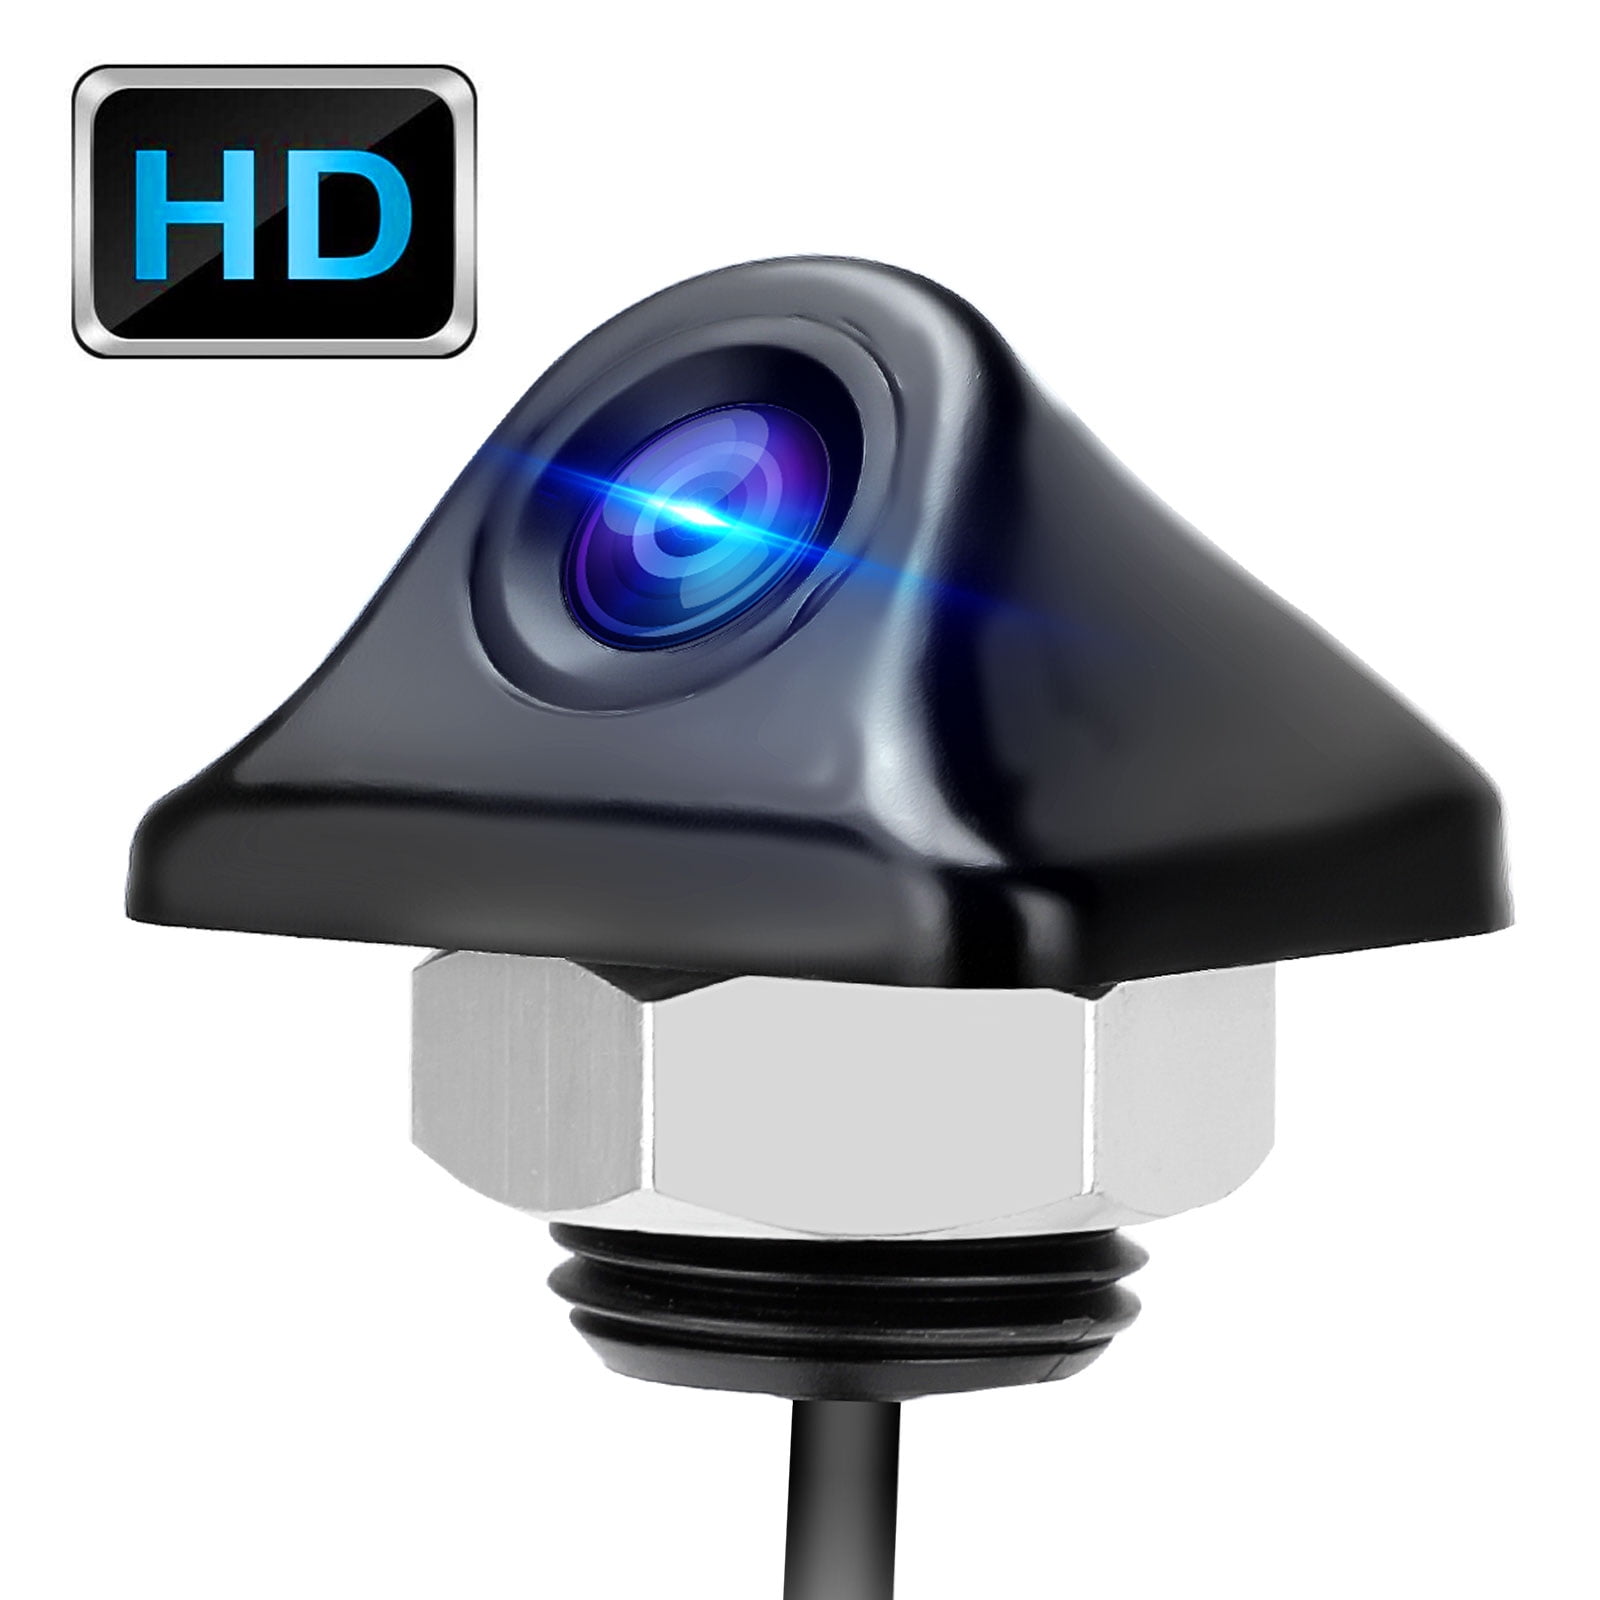 HD 170° Car Rear View Camera Parking Reverse Backup Cam Night Vision Waterproof 